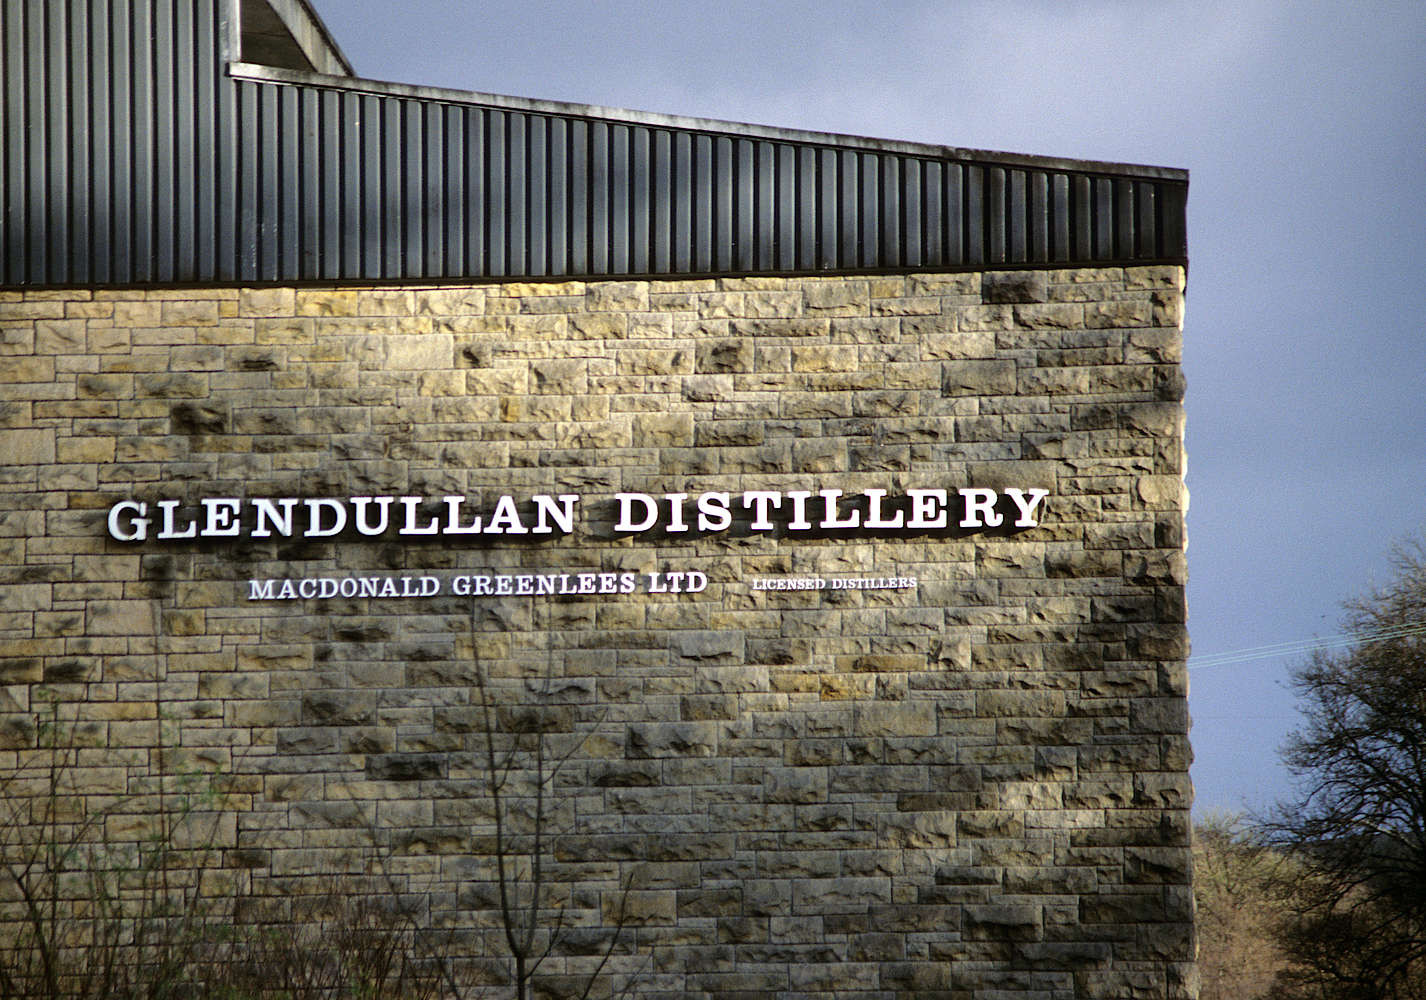 Glendullan known for producing quality single malt Scotch whiskies